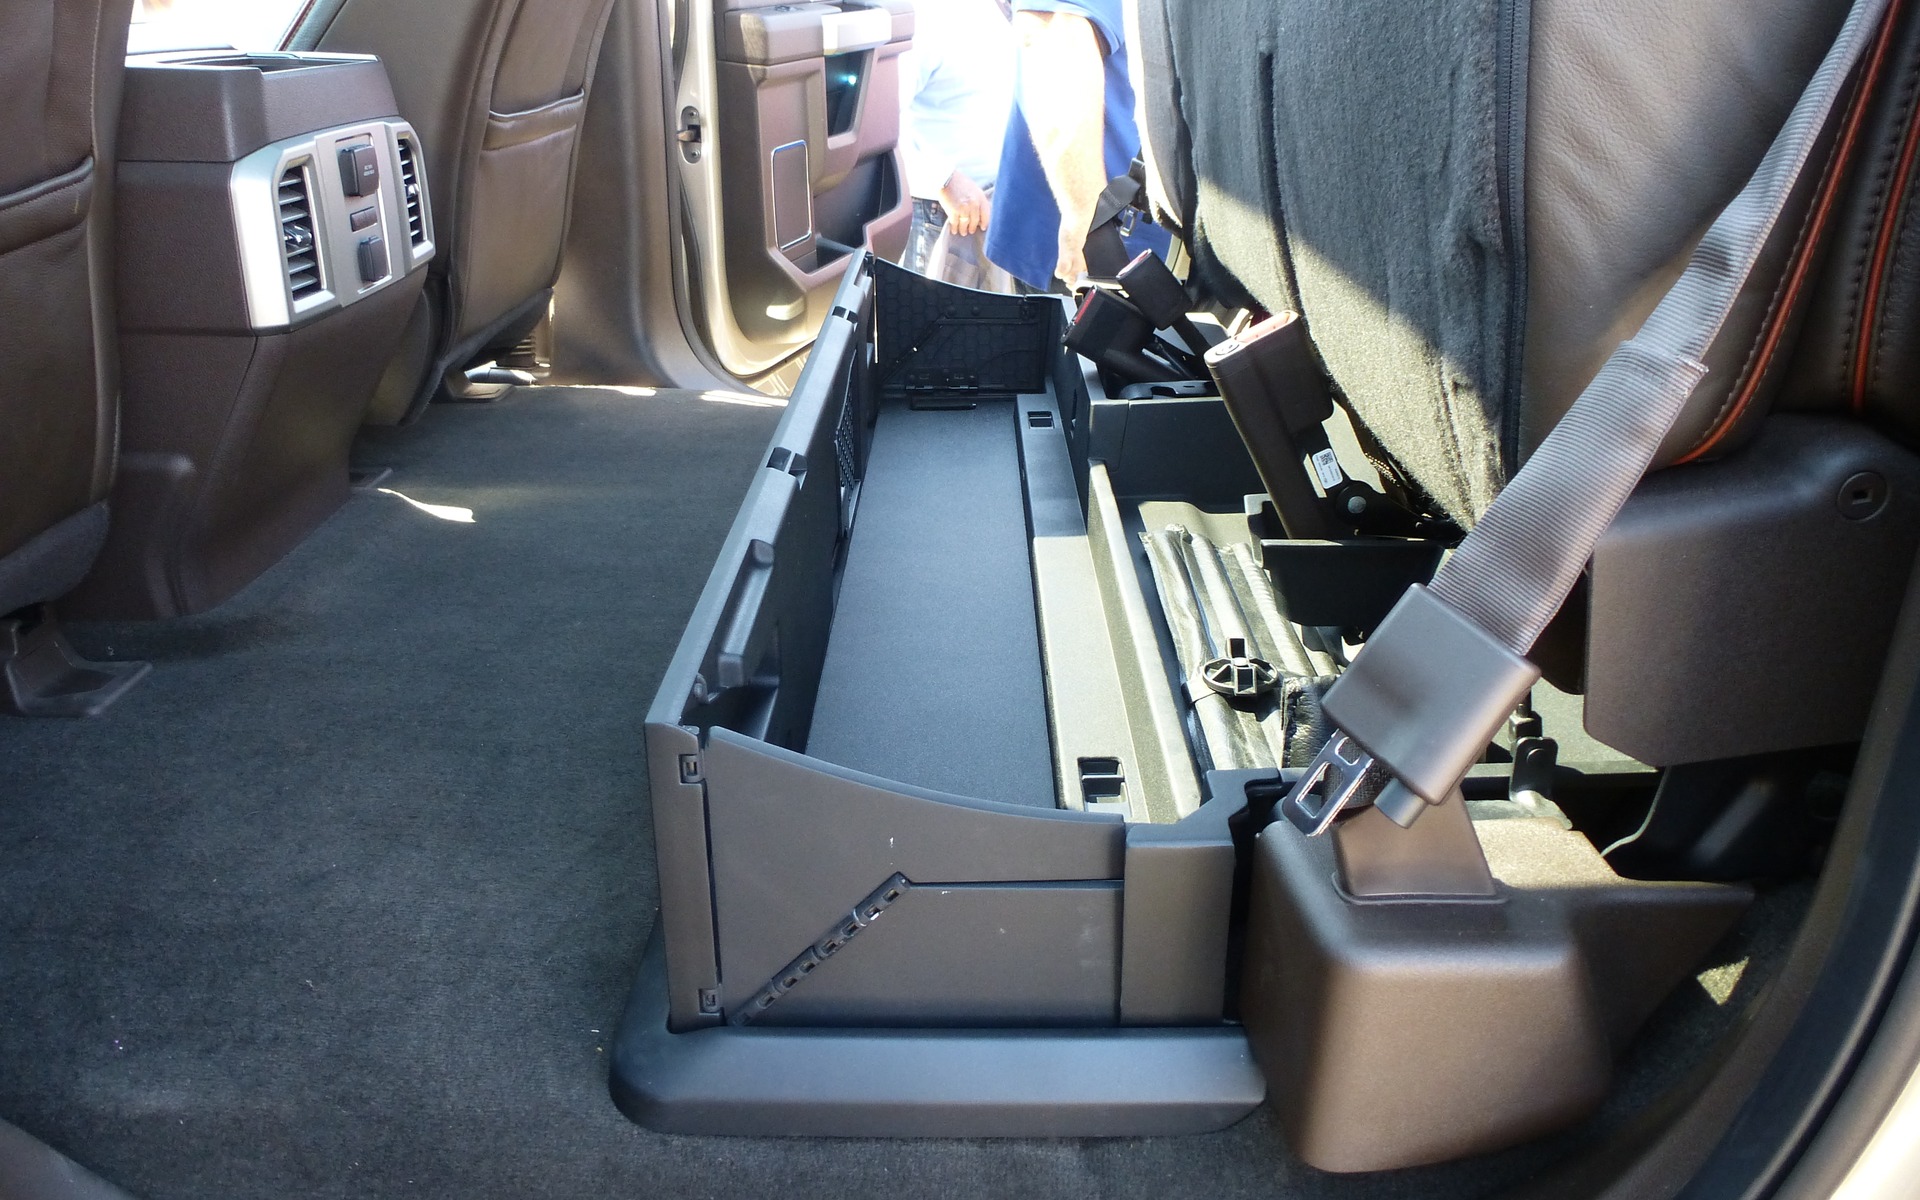 Ingenious storage below rear seat